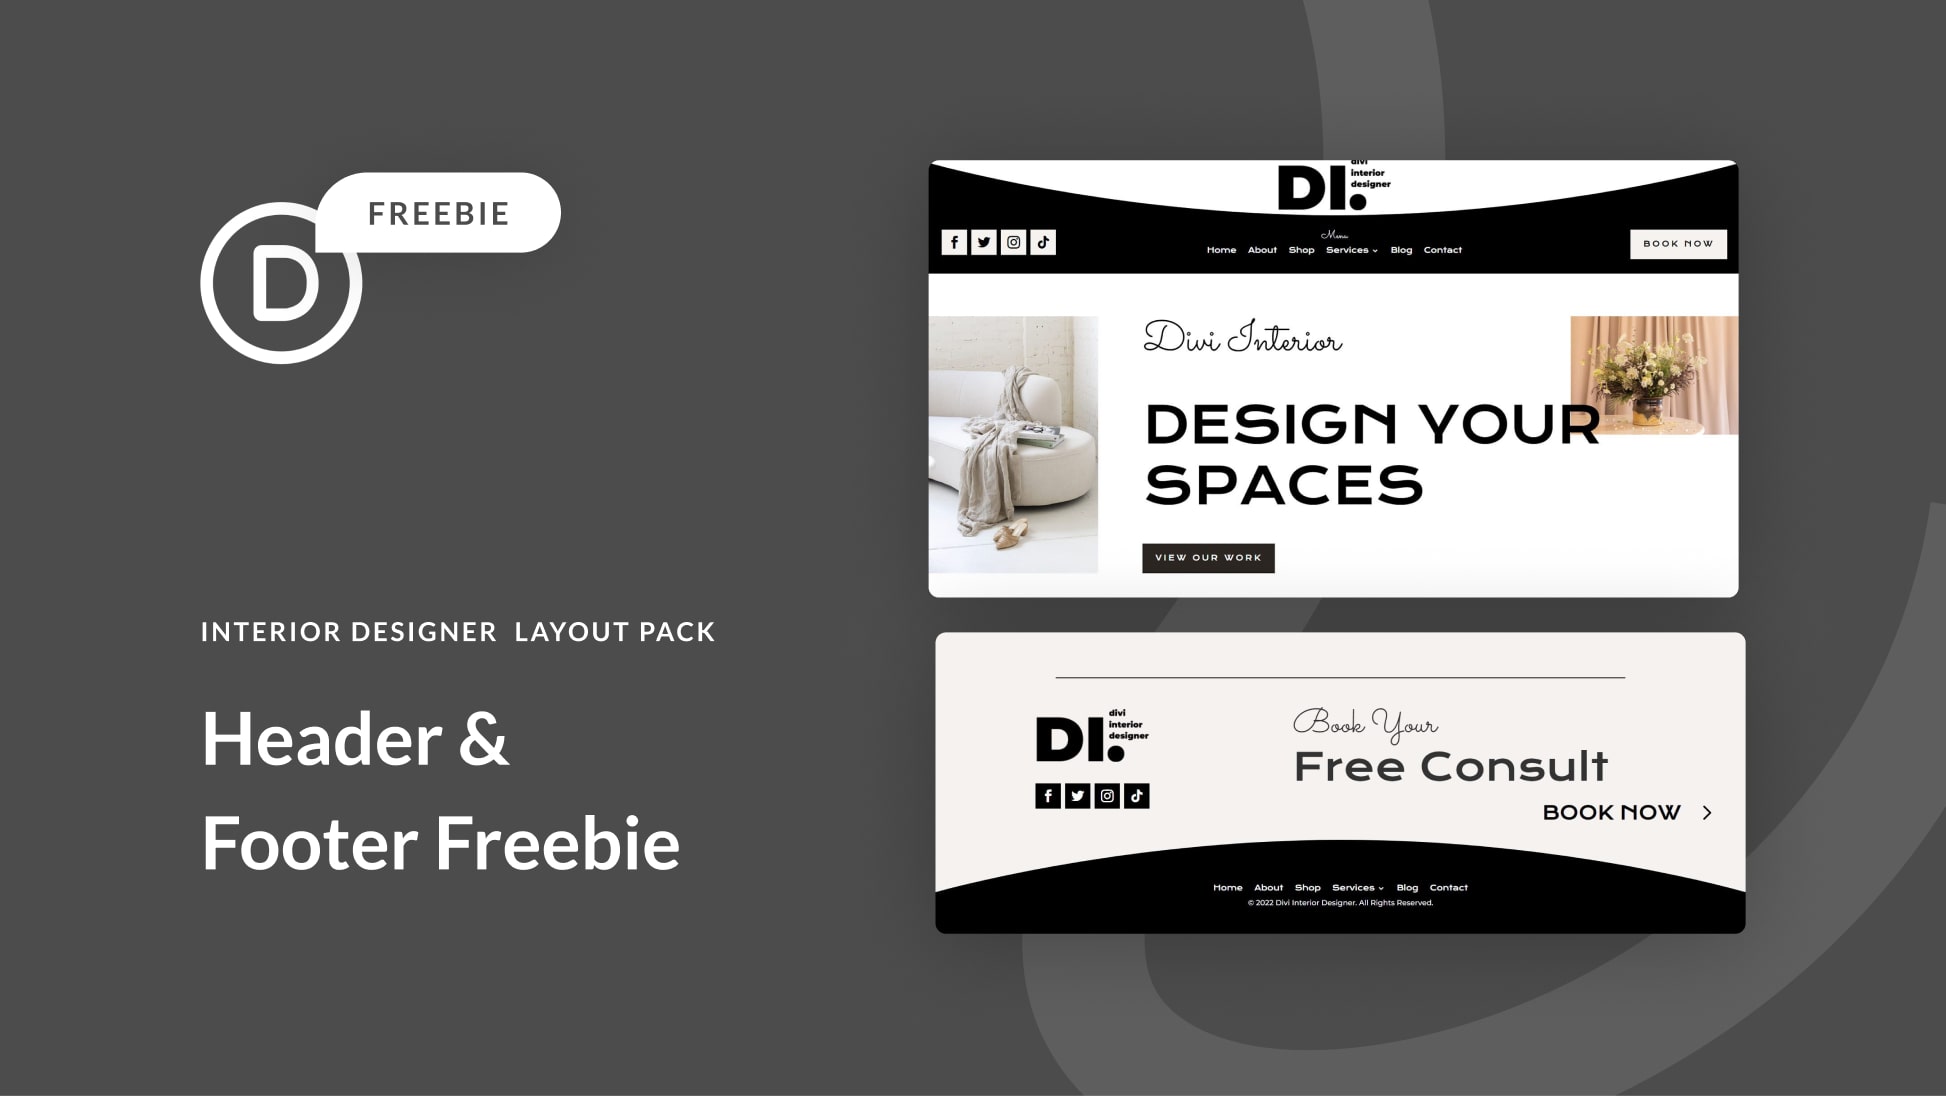 Download a FREE Header & Footer for Divi’s Interior Designer Layout Pack